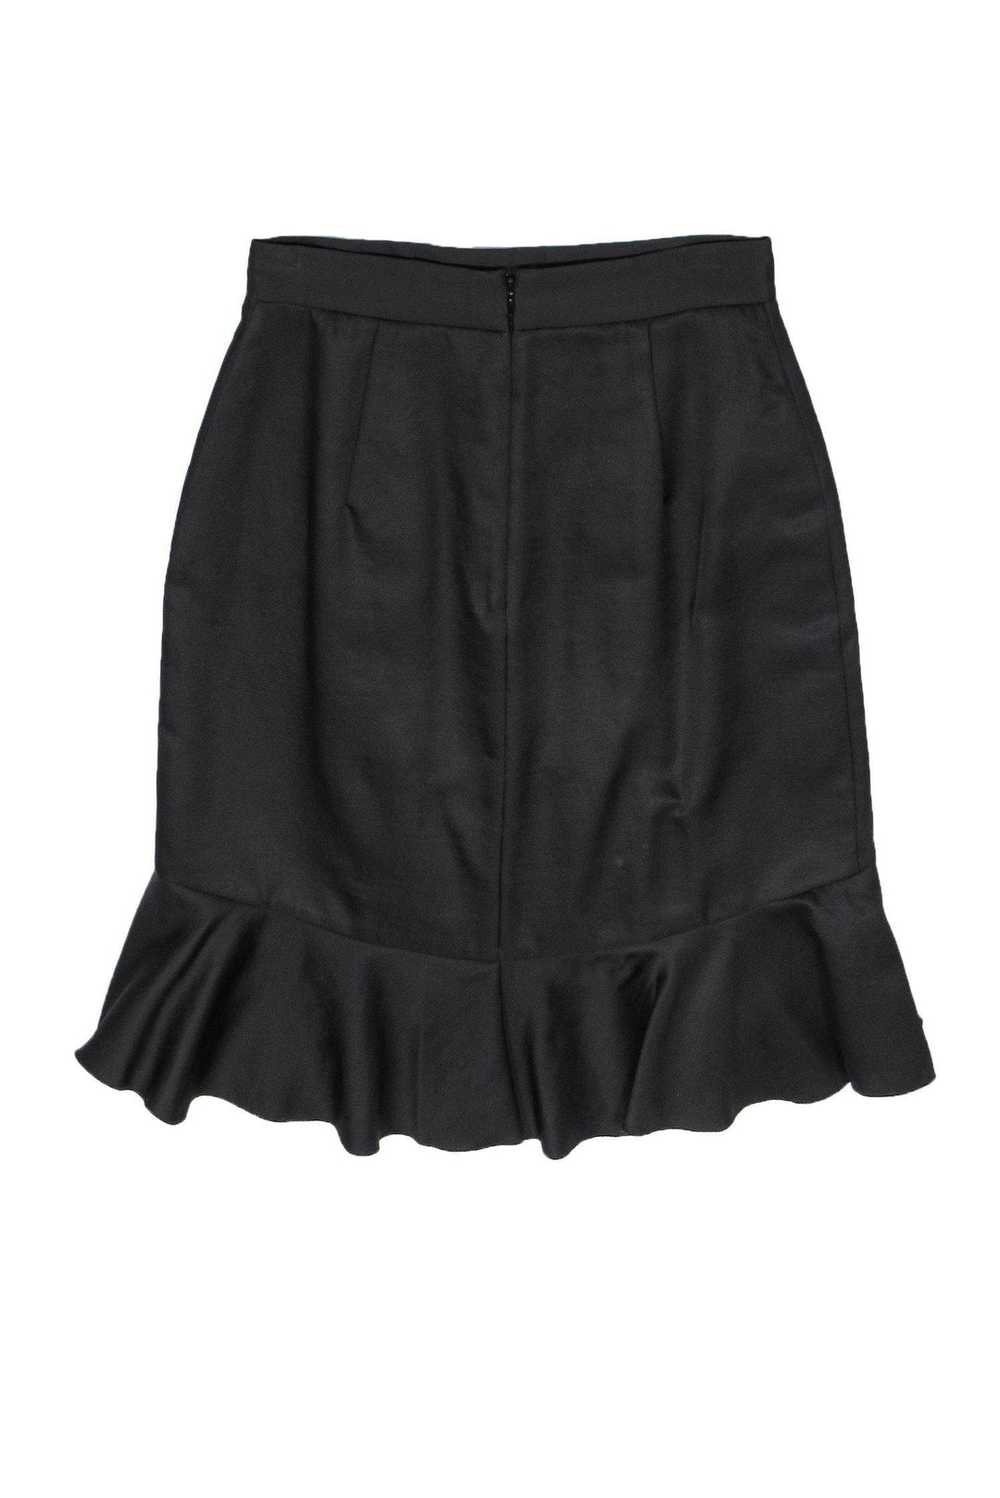 Prada - Black Flounce Wool & Silk Skirt Sz 8 - image 1